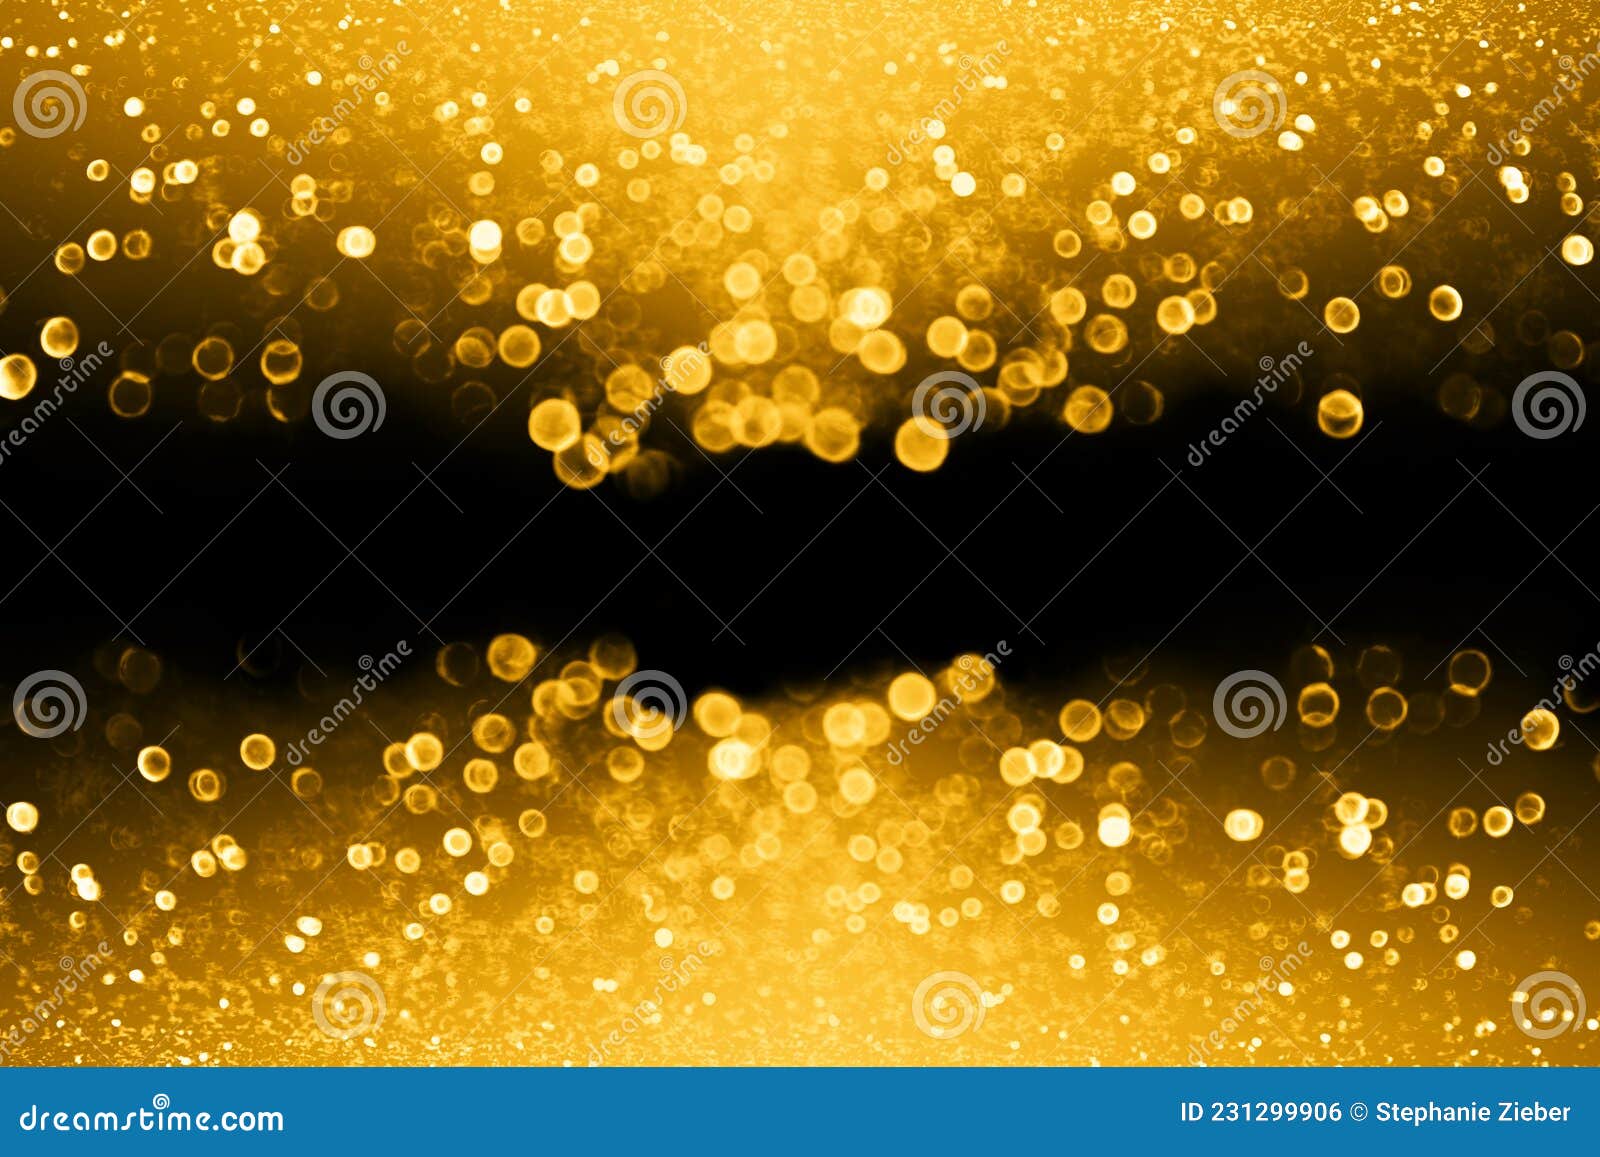 Gold Black Glitter Birthday Banner or 50 Anniversary Background Invitation  Stock Photo - Image of 50th, border: 231299906